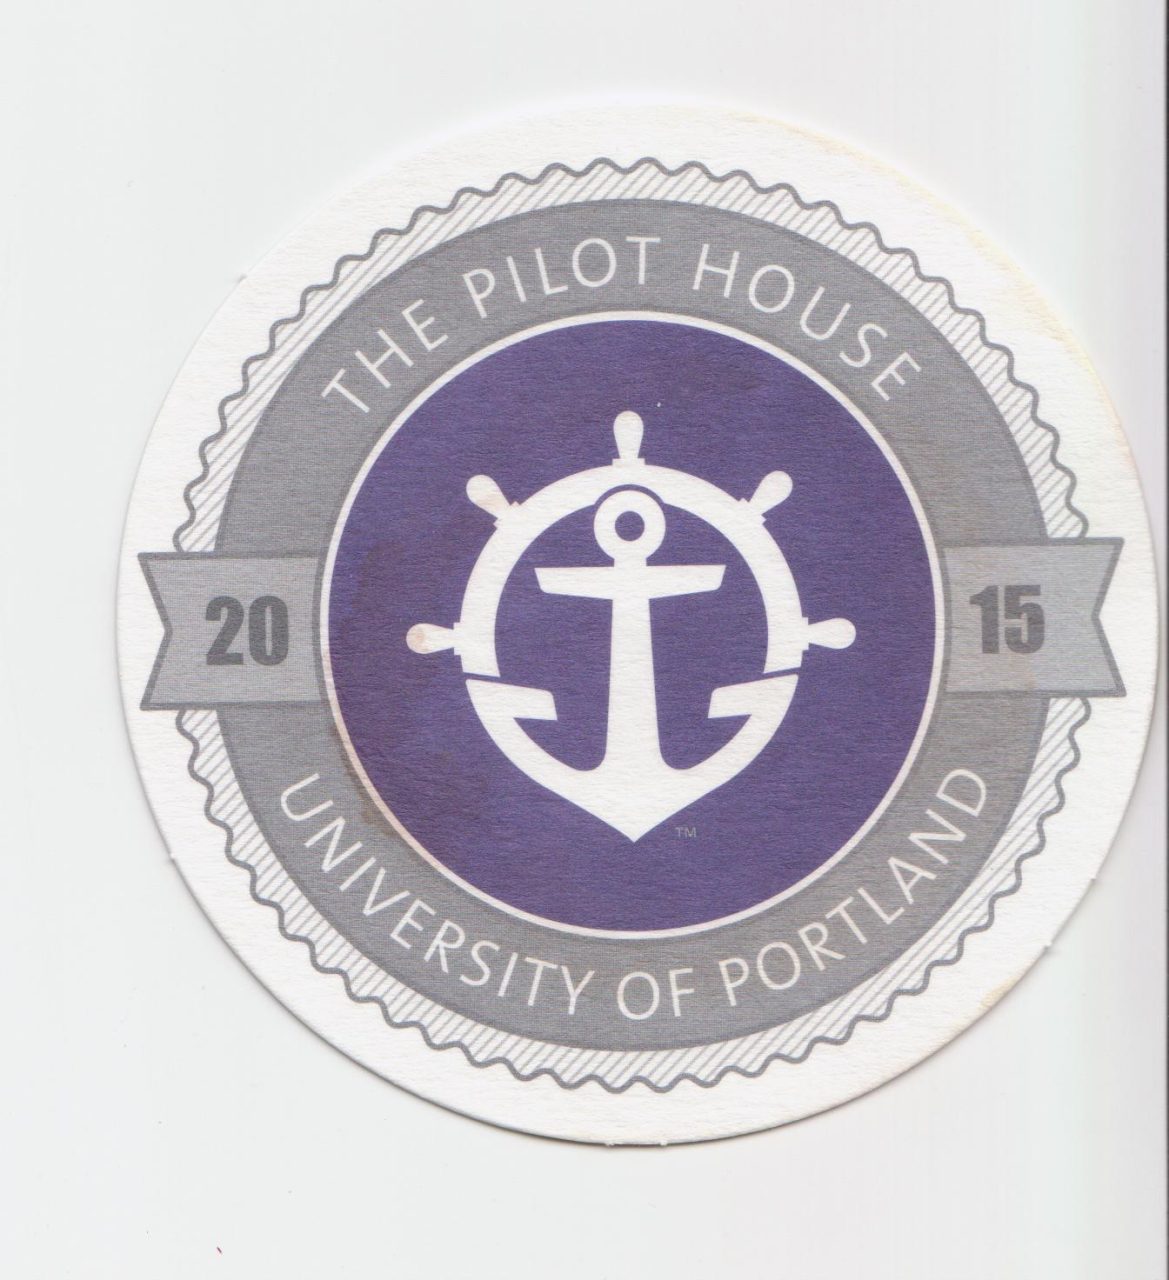 Pilot House Wheel and Anchor logo on beverage coaster.